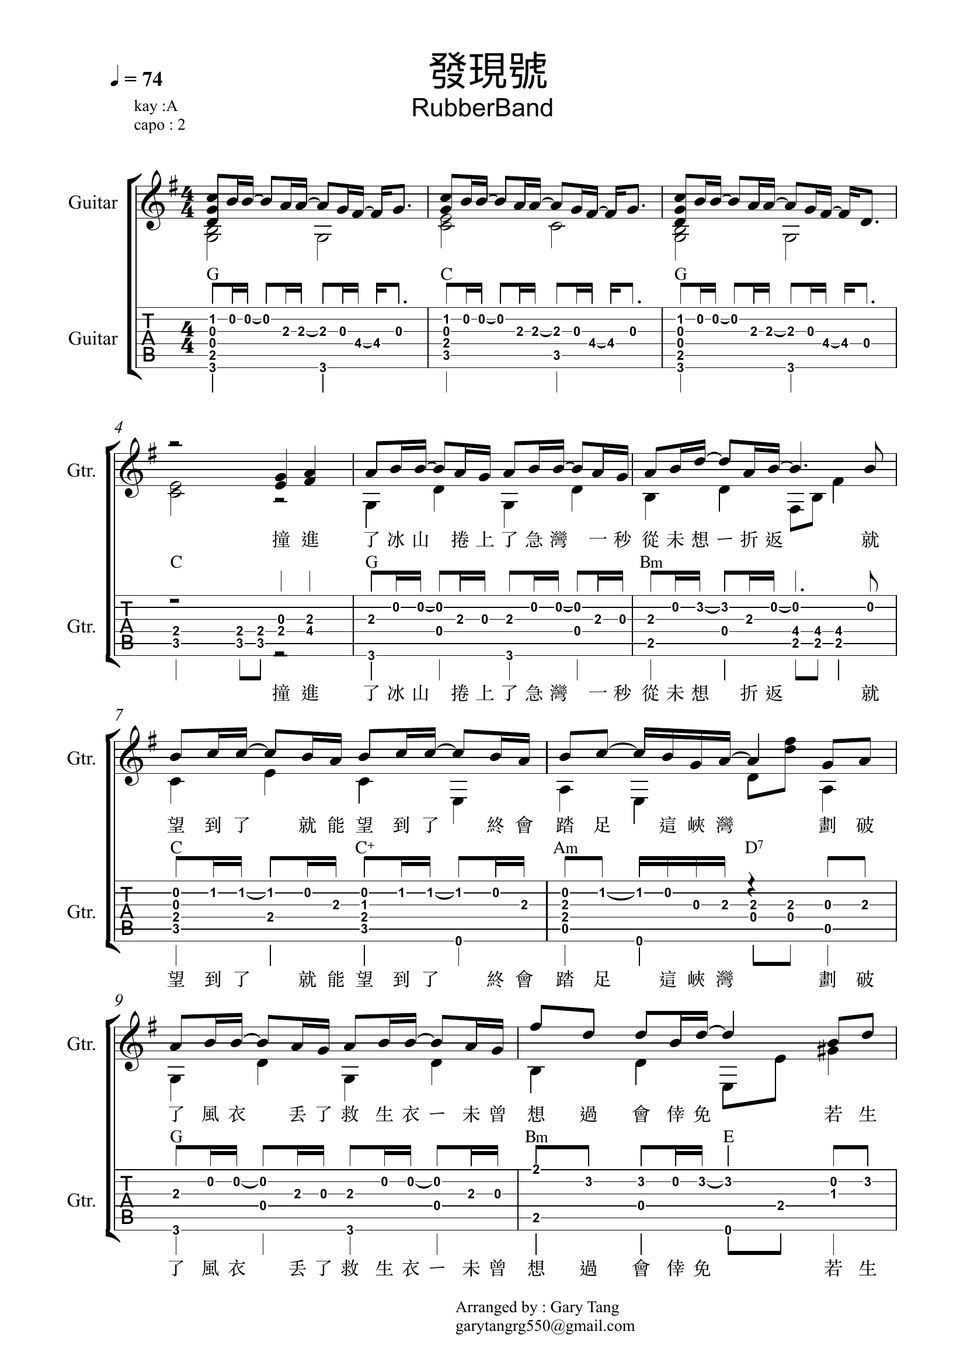 RubberBand - 發現號 (發現號 5線/6線譜 Fingerstyle Guitar) by Gary Tang